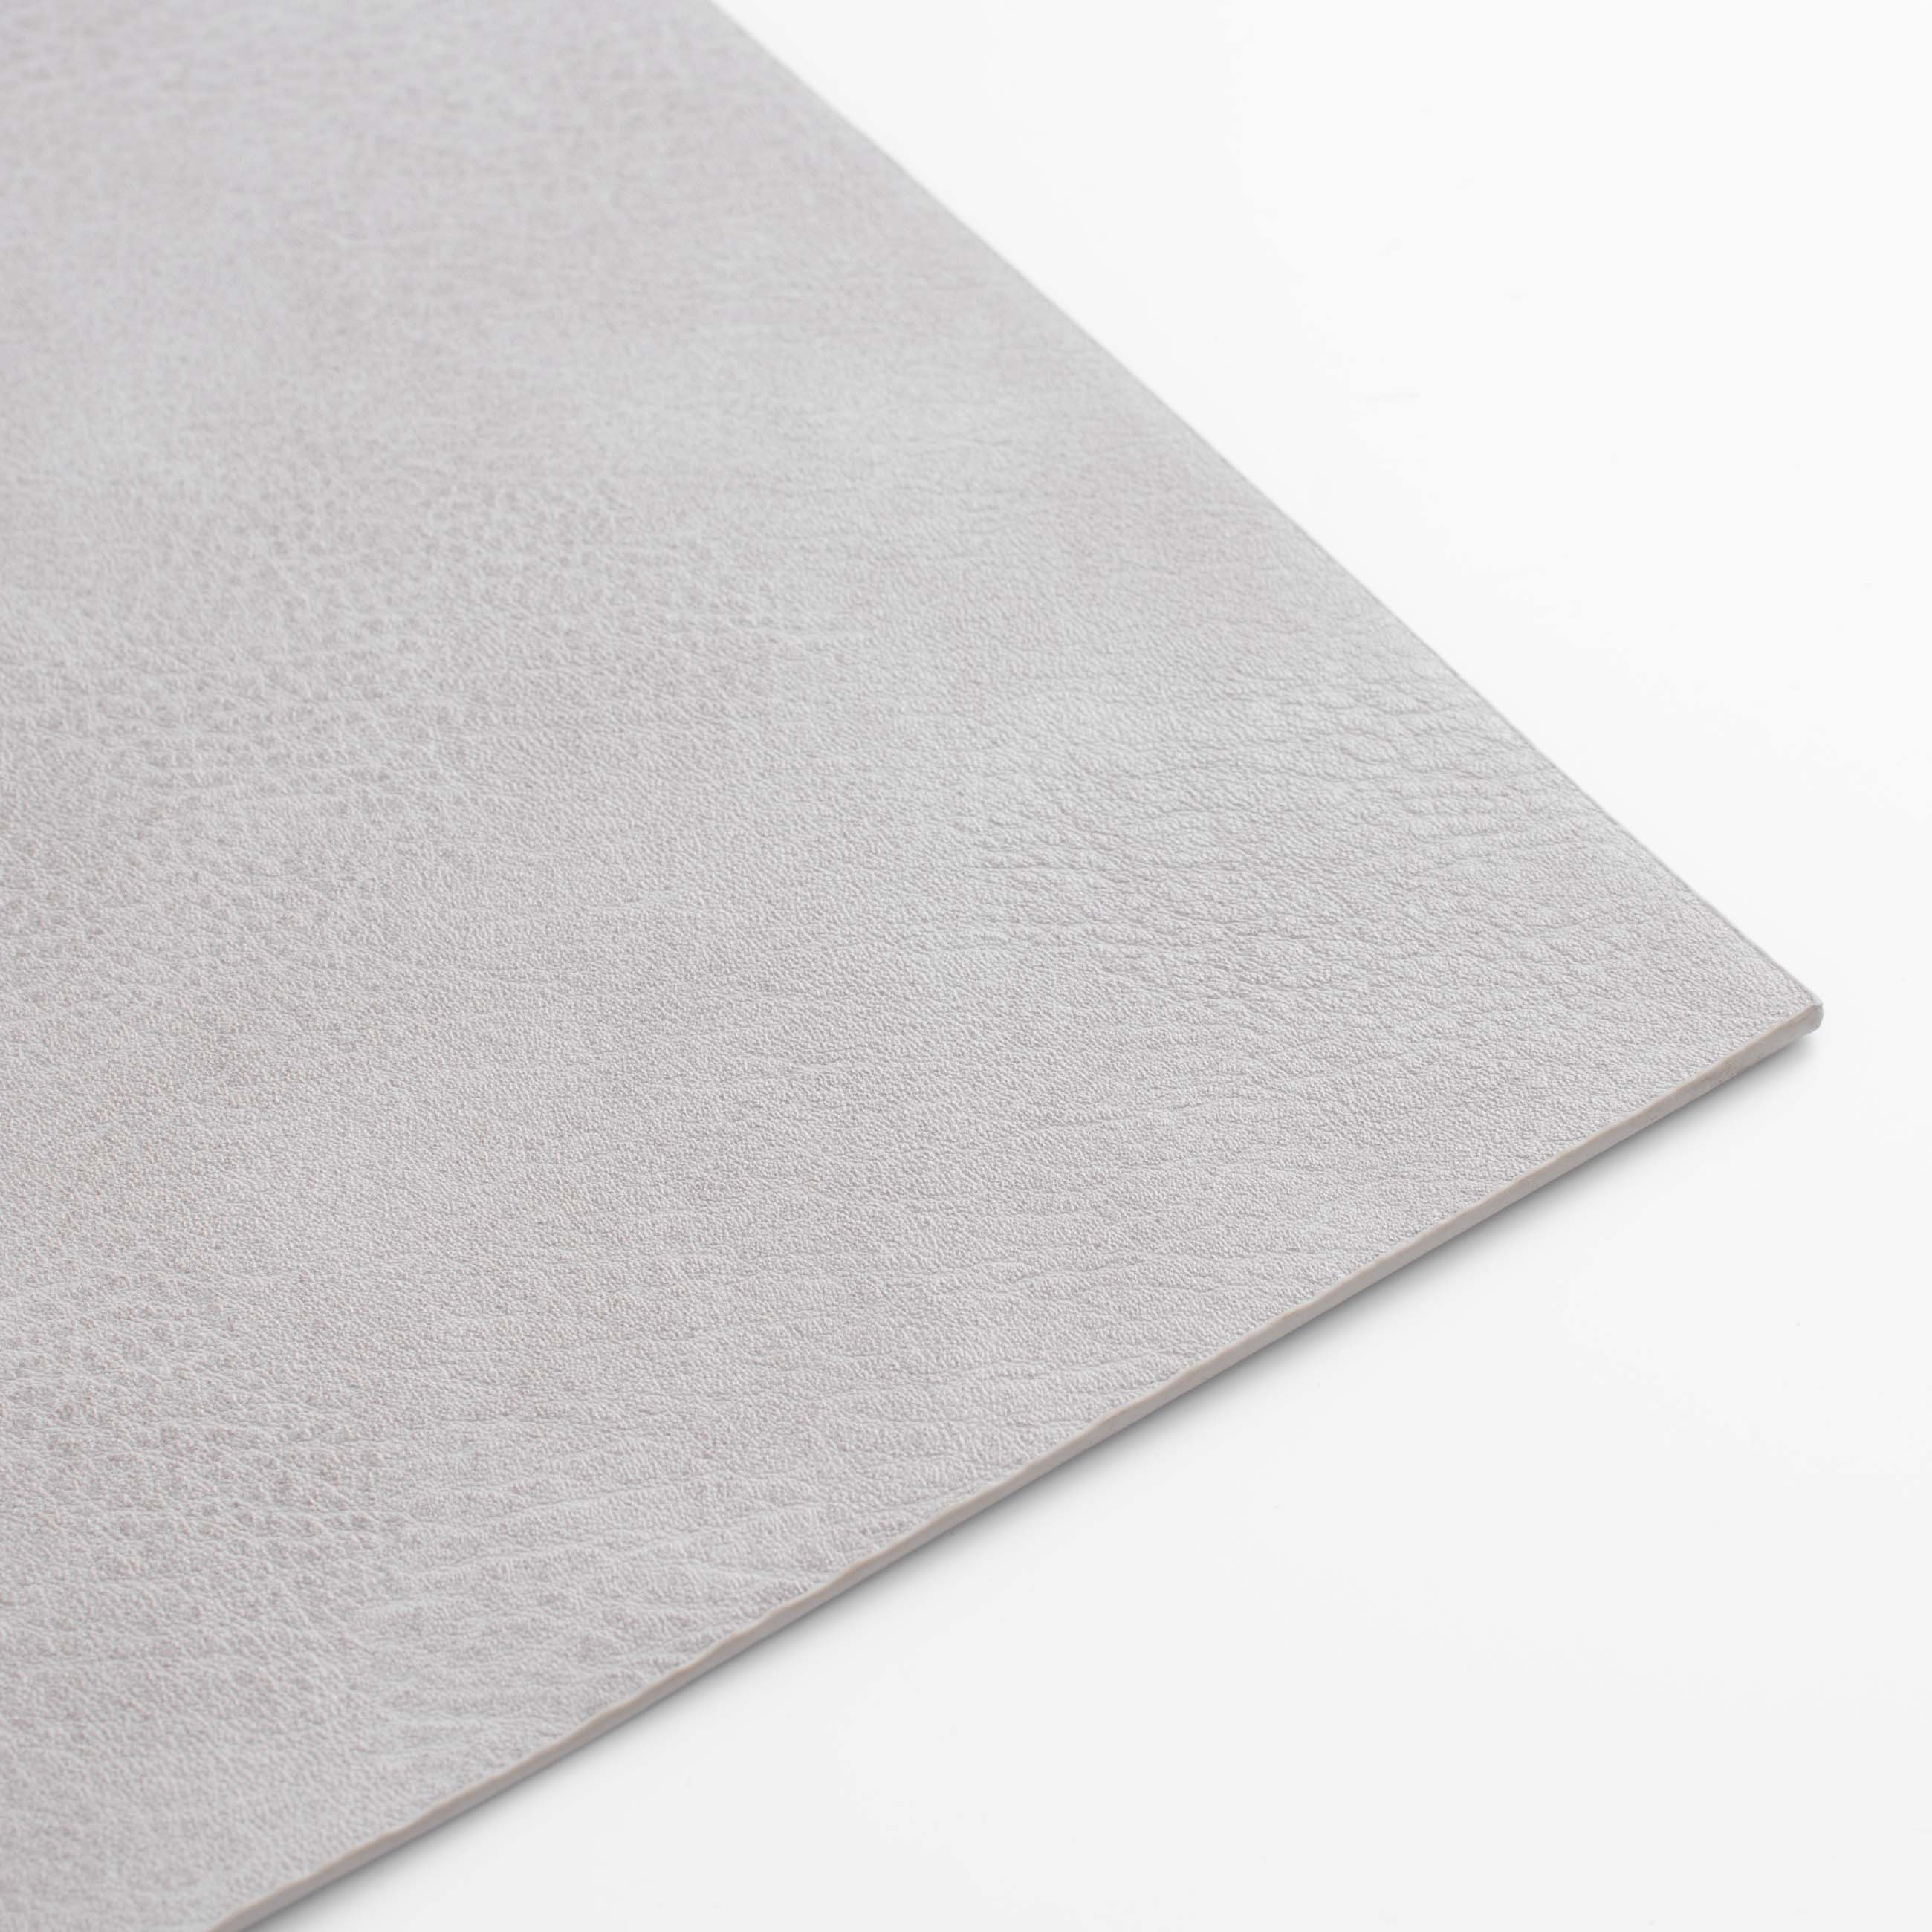 Napkin for appliances, 30x45 cm, PVC, rectangular, gray, Rock изображение № 2